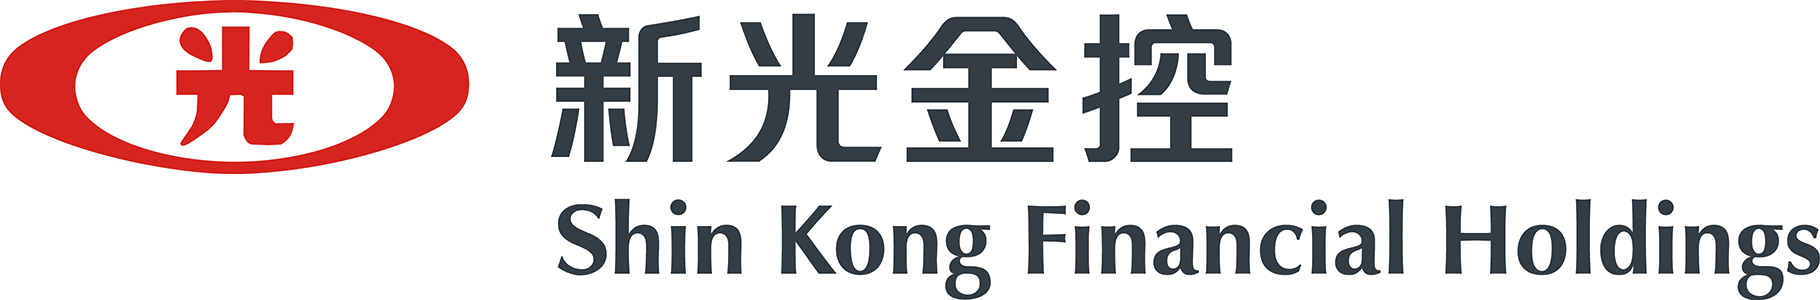 Shin Kong Financial Holding logo large (transparent PNG)